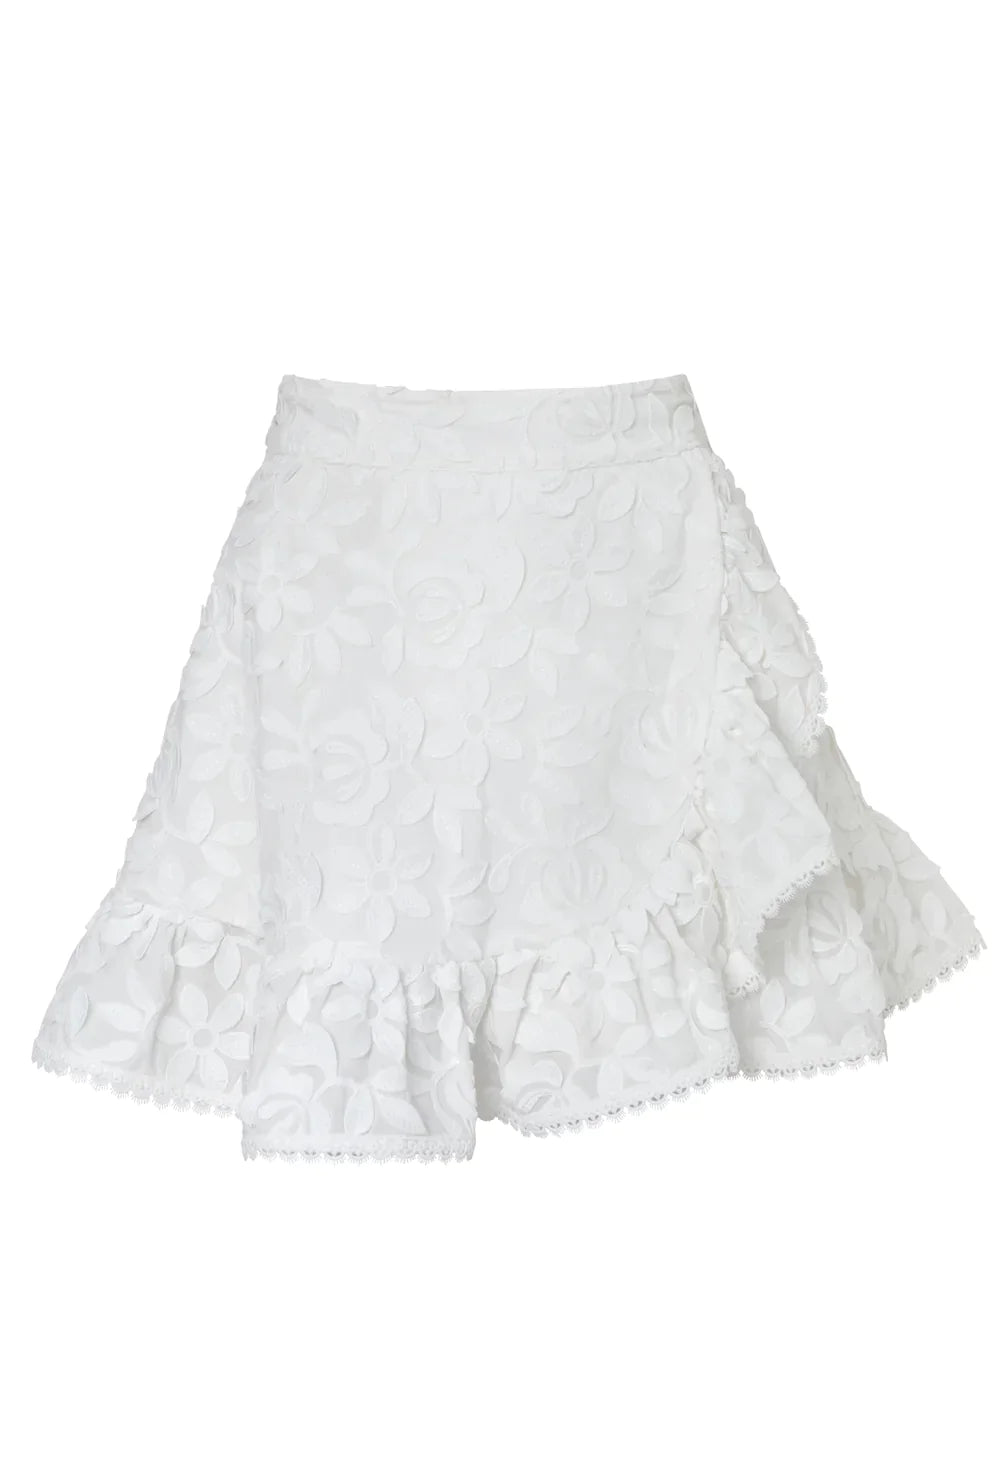 Waimari Illusion Skirt - Premium Short skirt from Marina St Barth - Just $275.00! Shop now at Marina St Barth